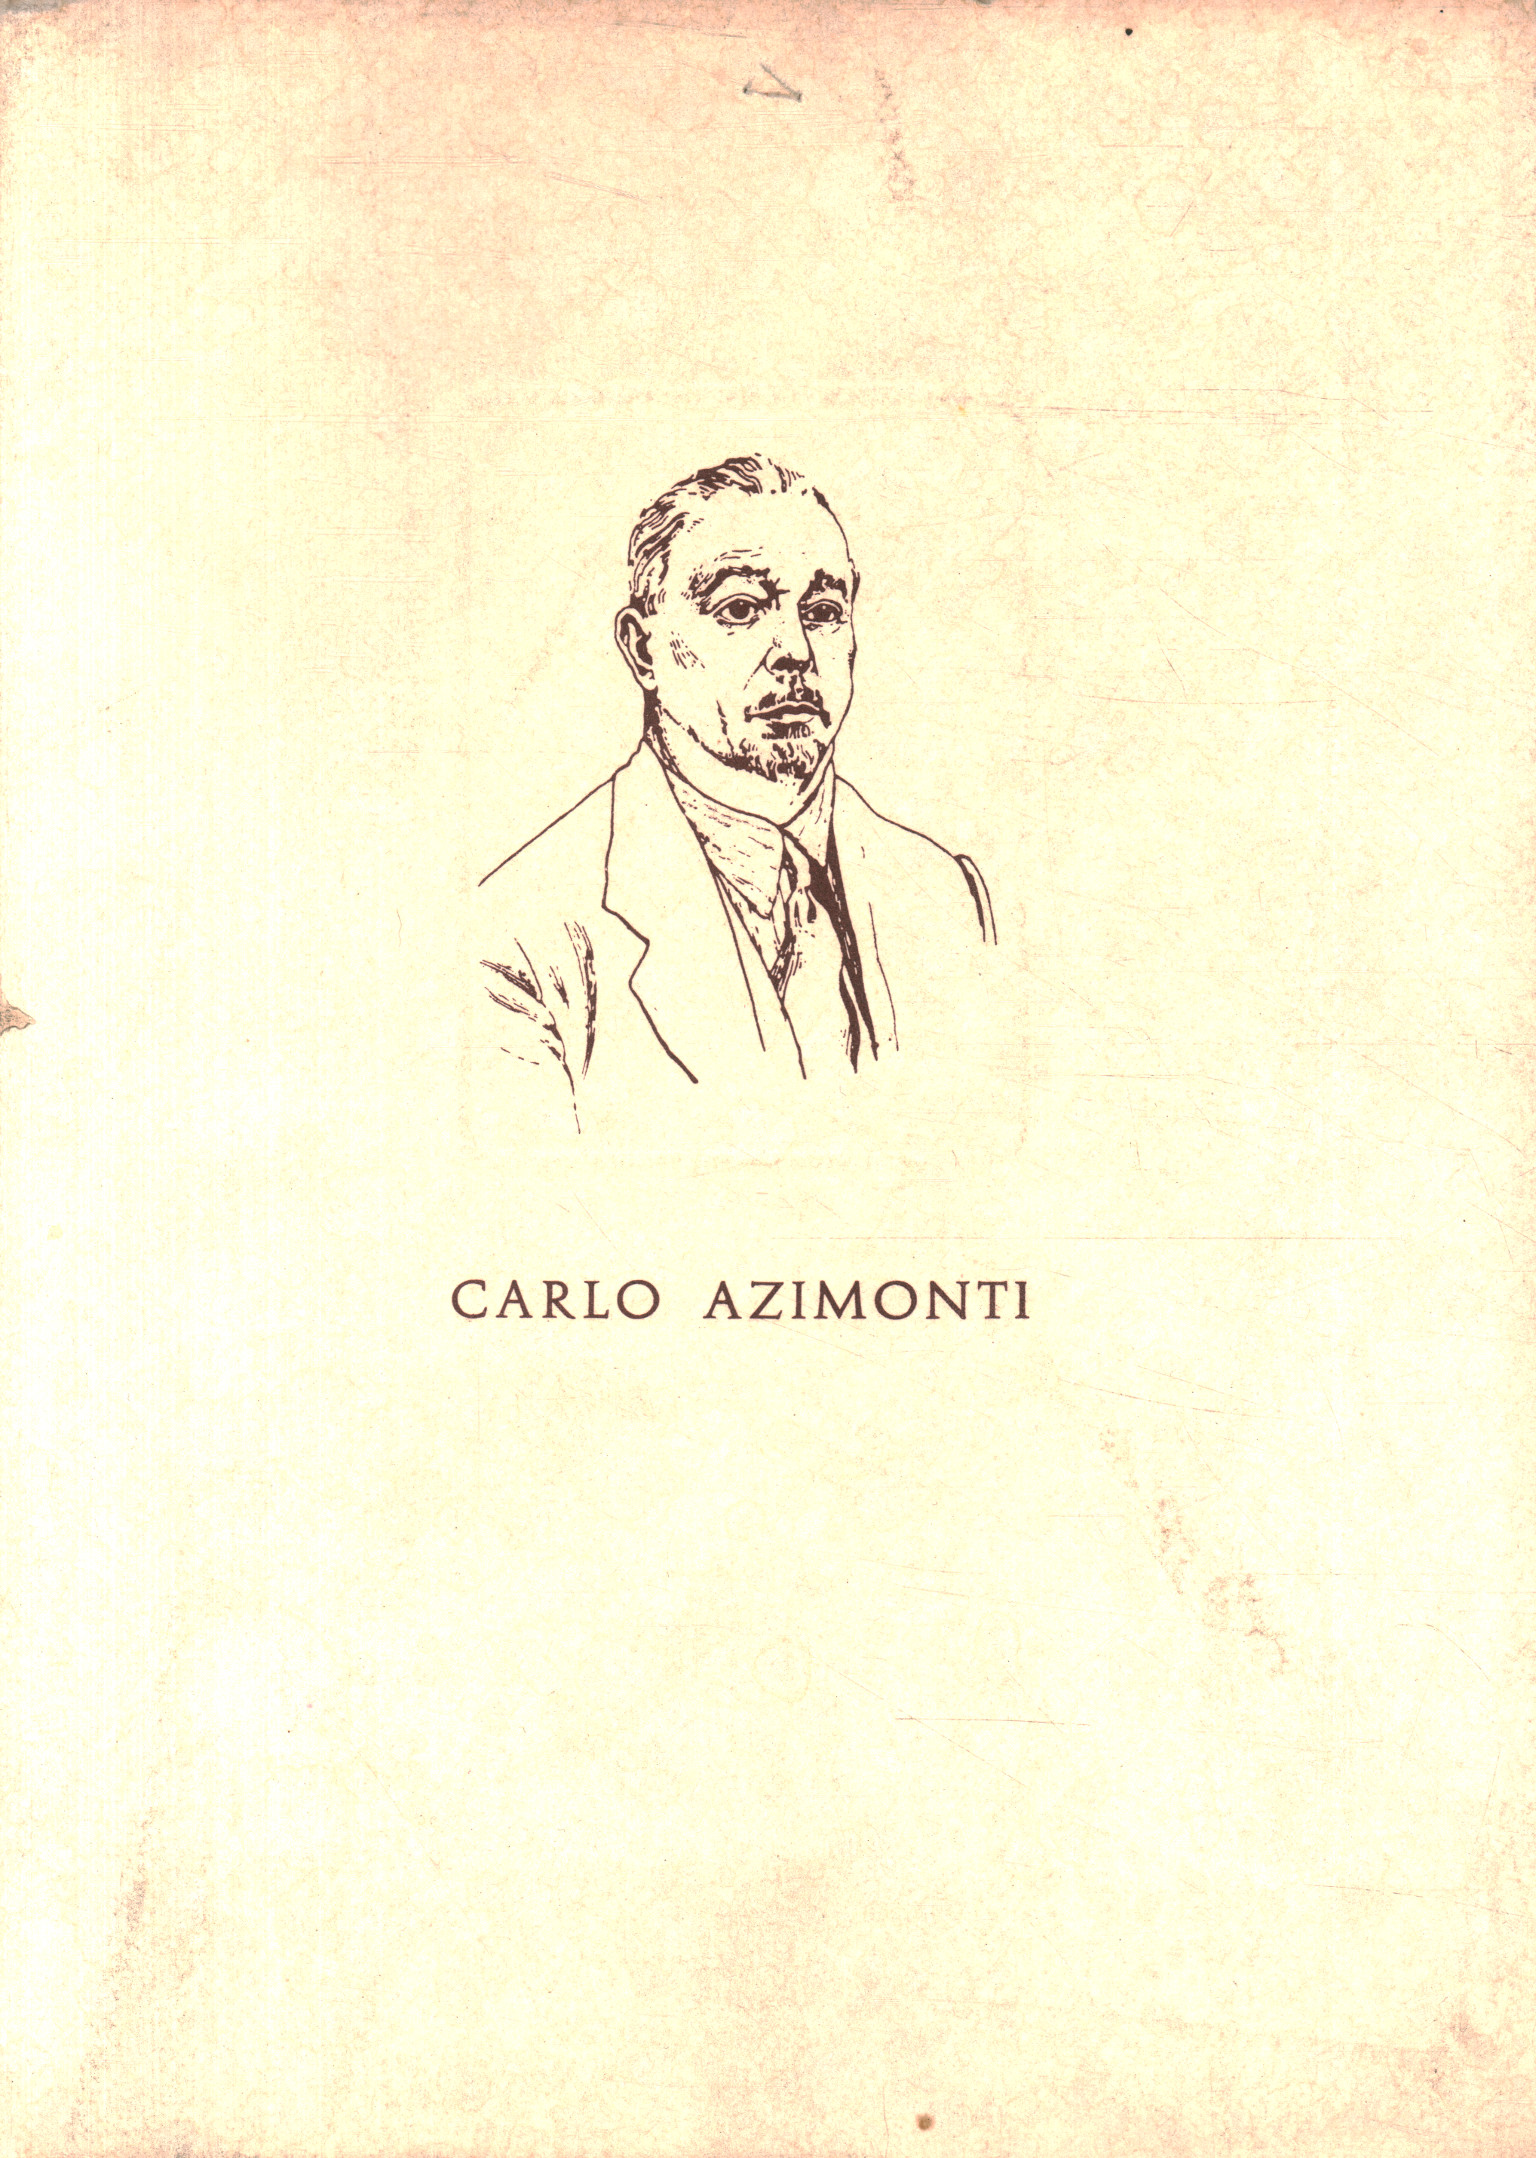 Carlo Azimonti. The man is l0apos